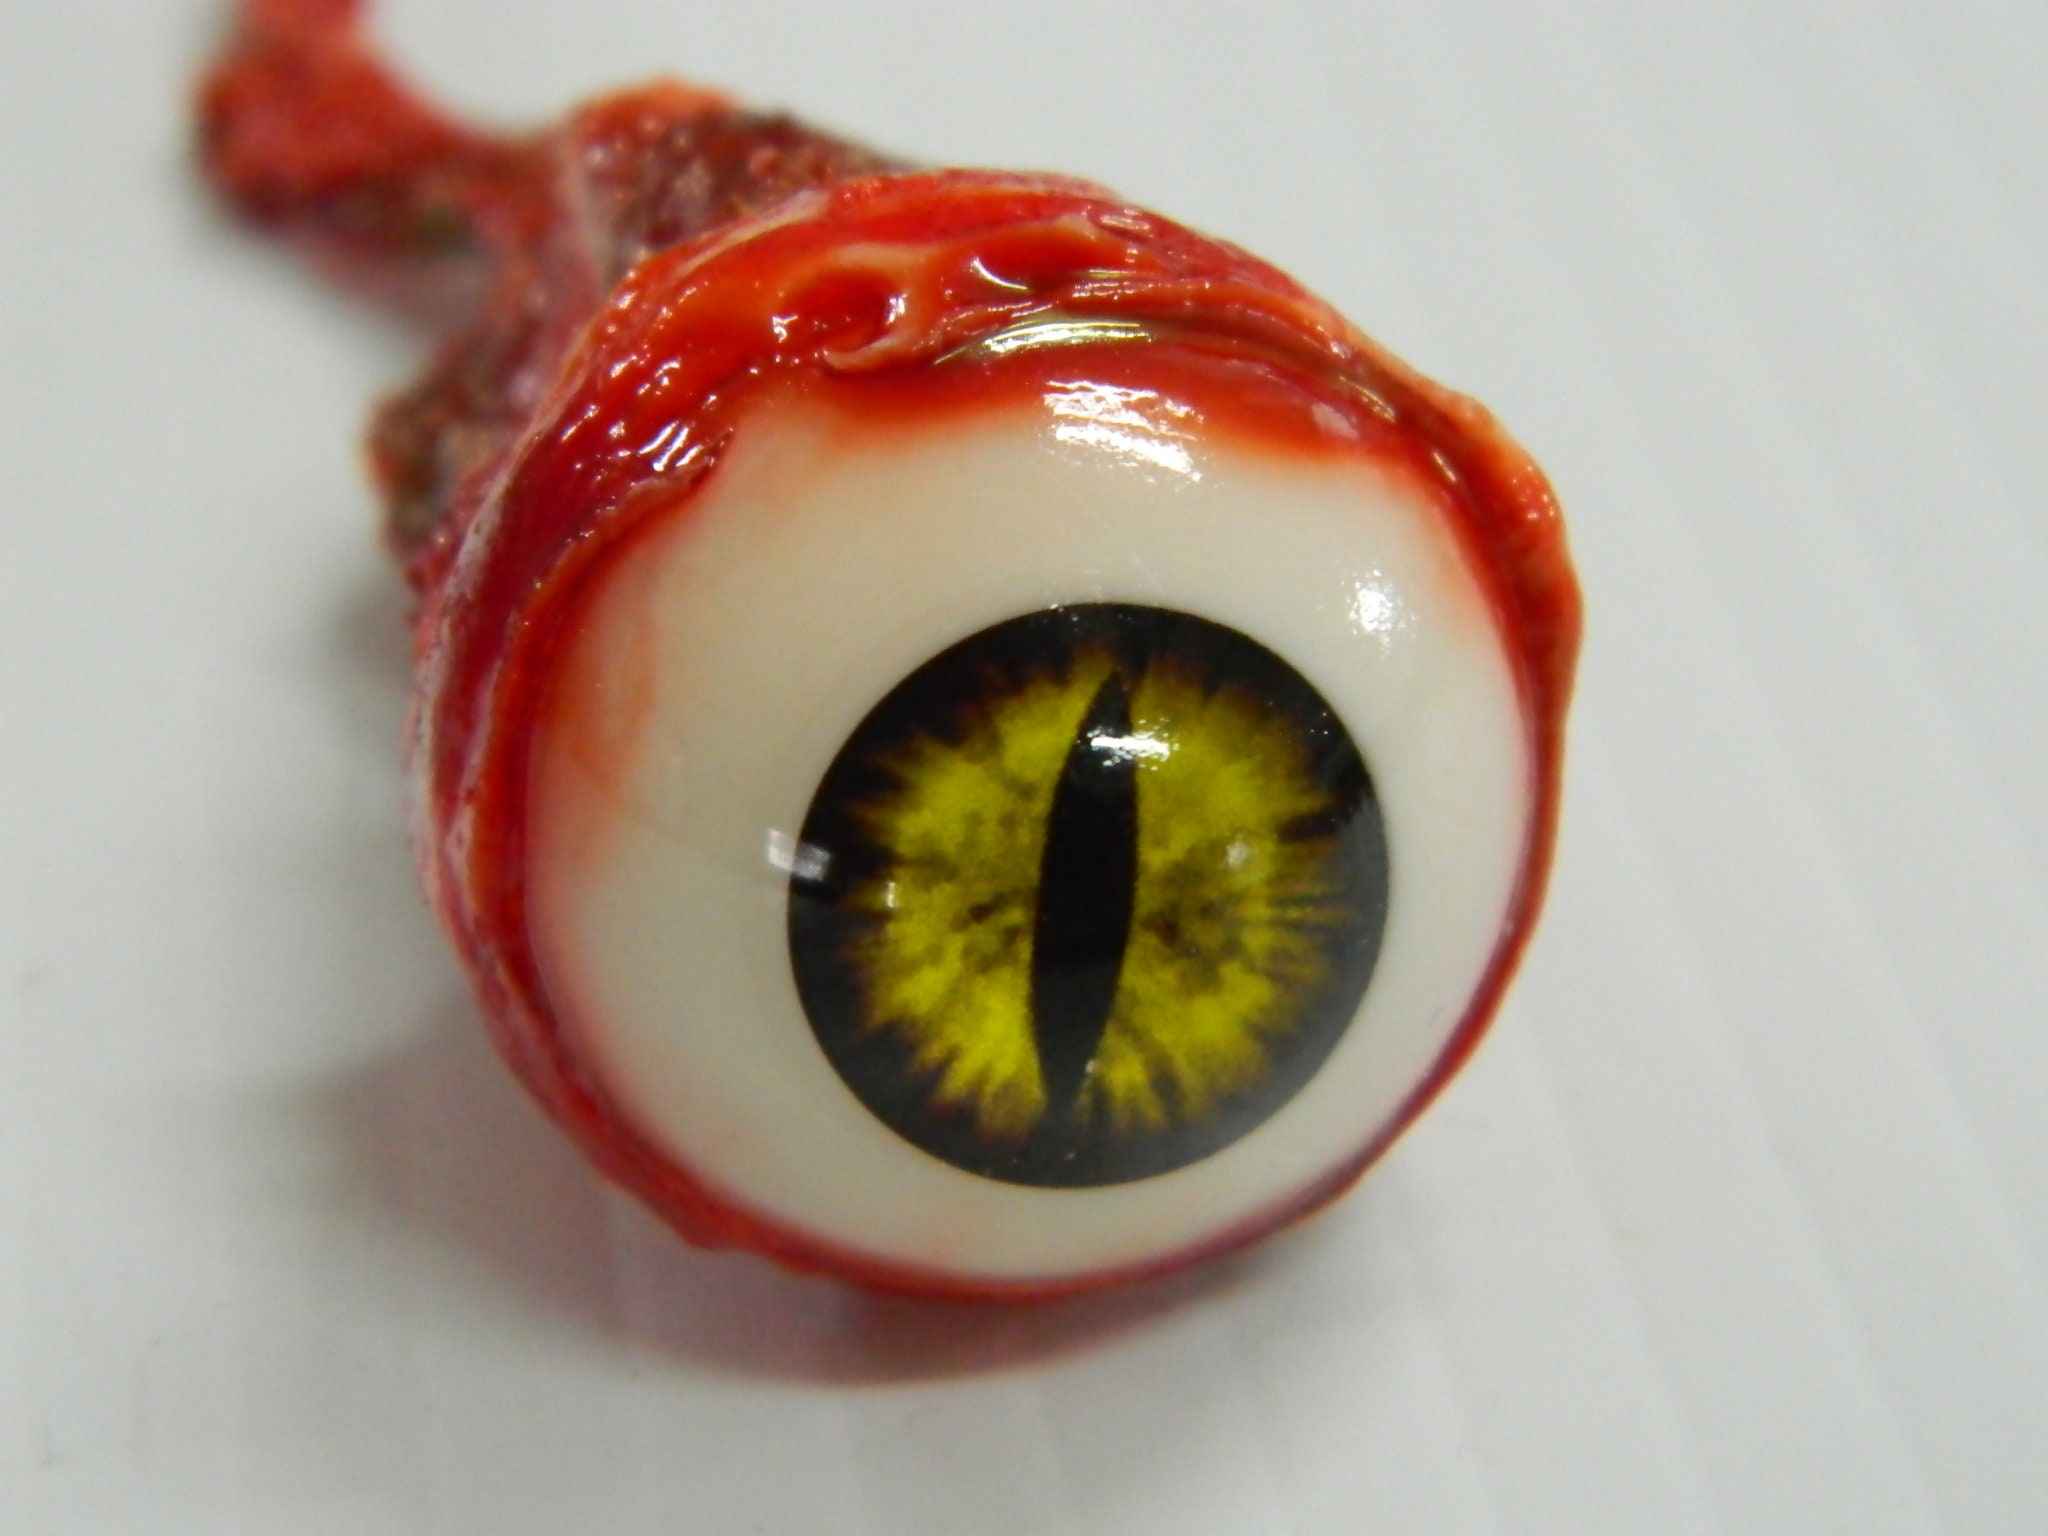 8pc Realistic Half Round Hollow Fake Eyes Eyeball Halloween Prop Horror 20mm 